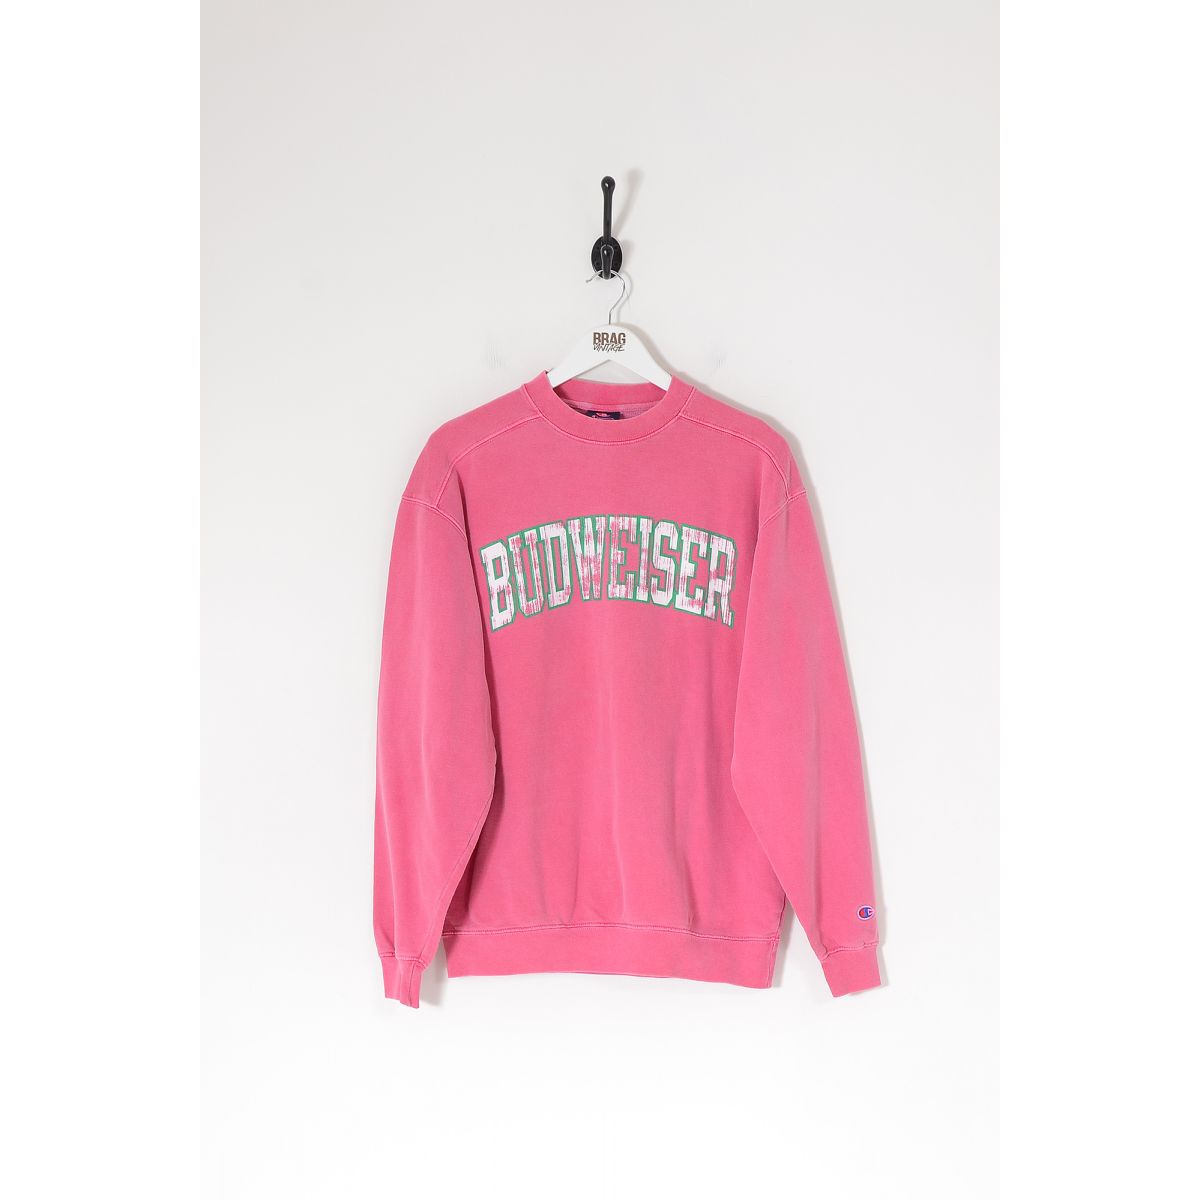 Vintage CHAMPION "Budweiser" Sweatshirt Pink Medium